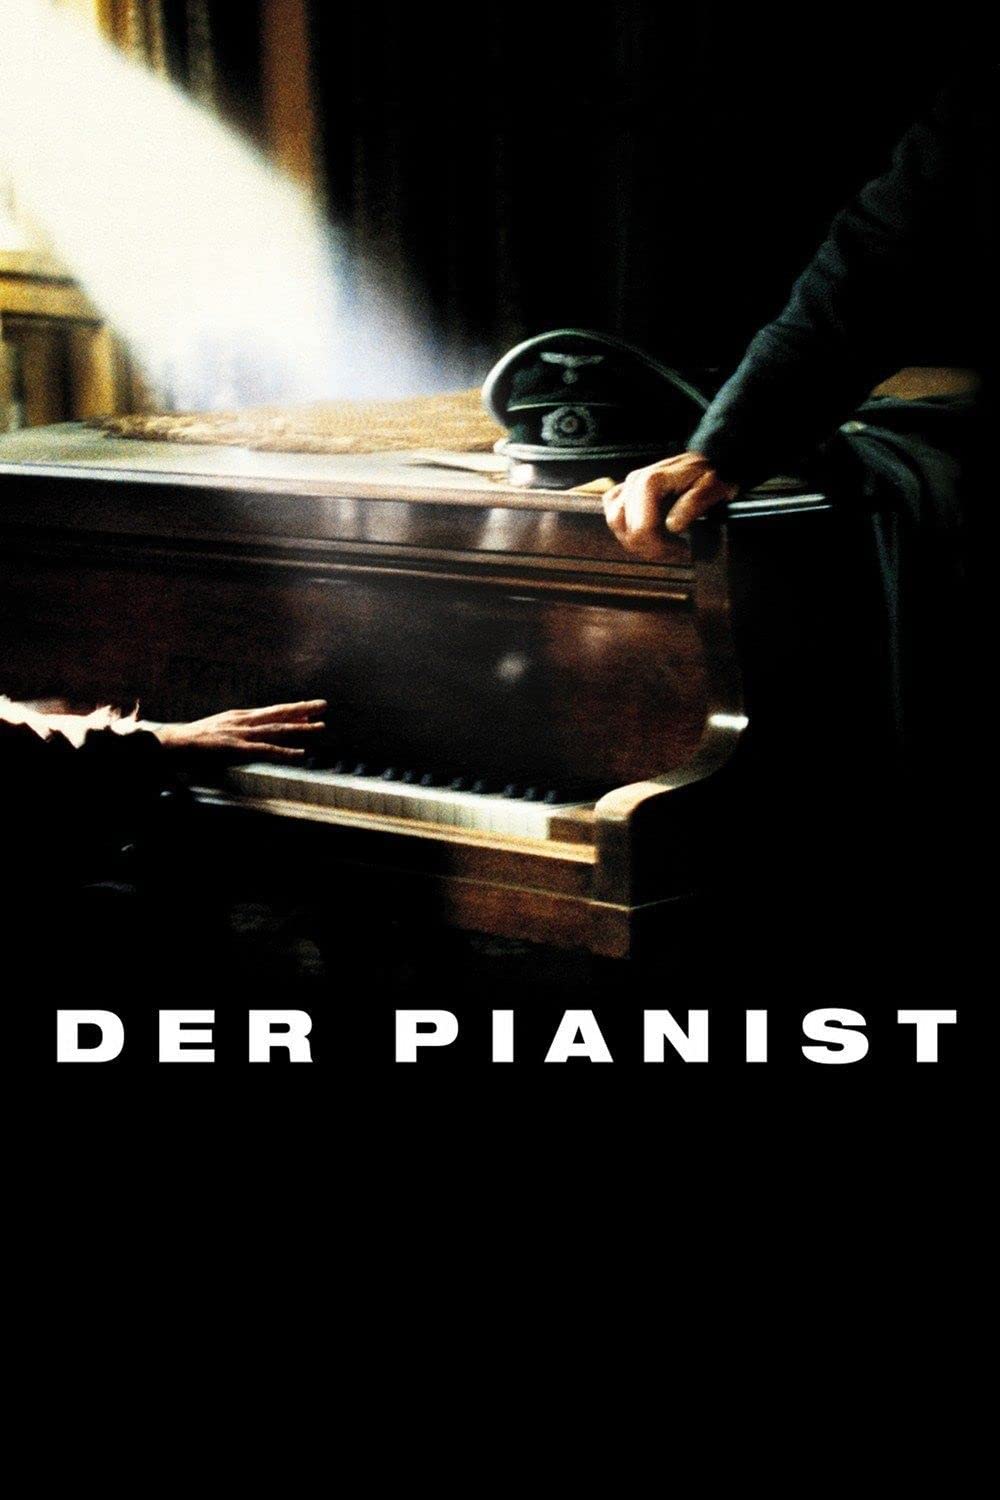 Filmbeschreibung zu The Pianist